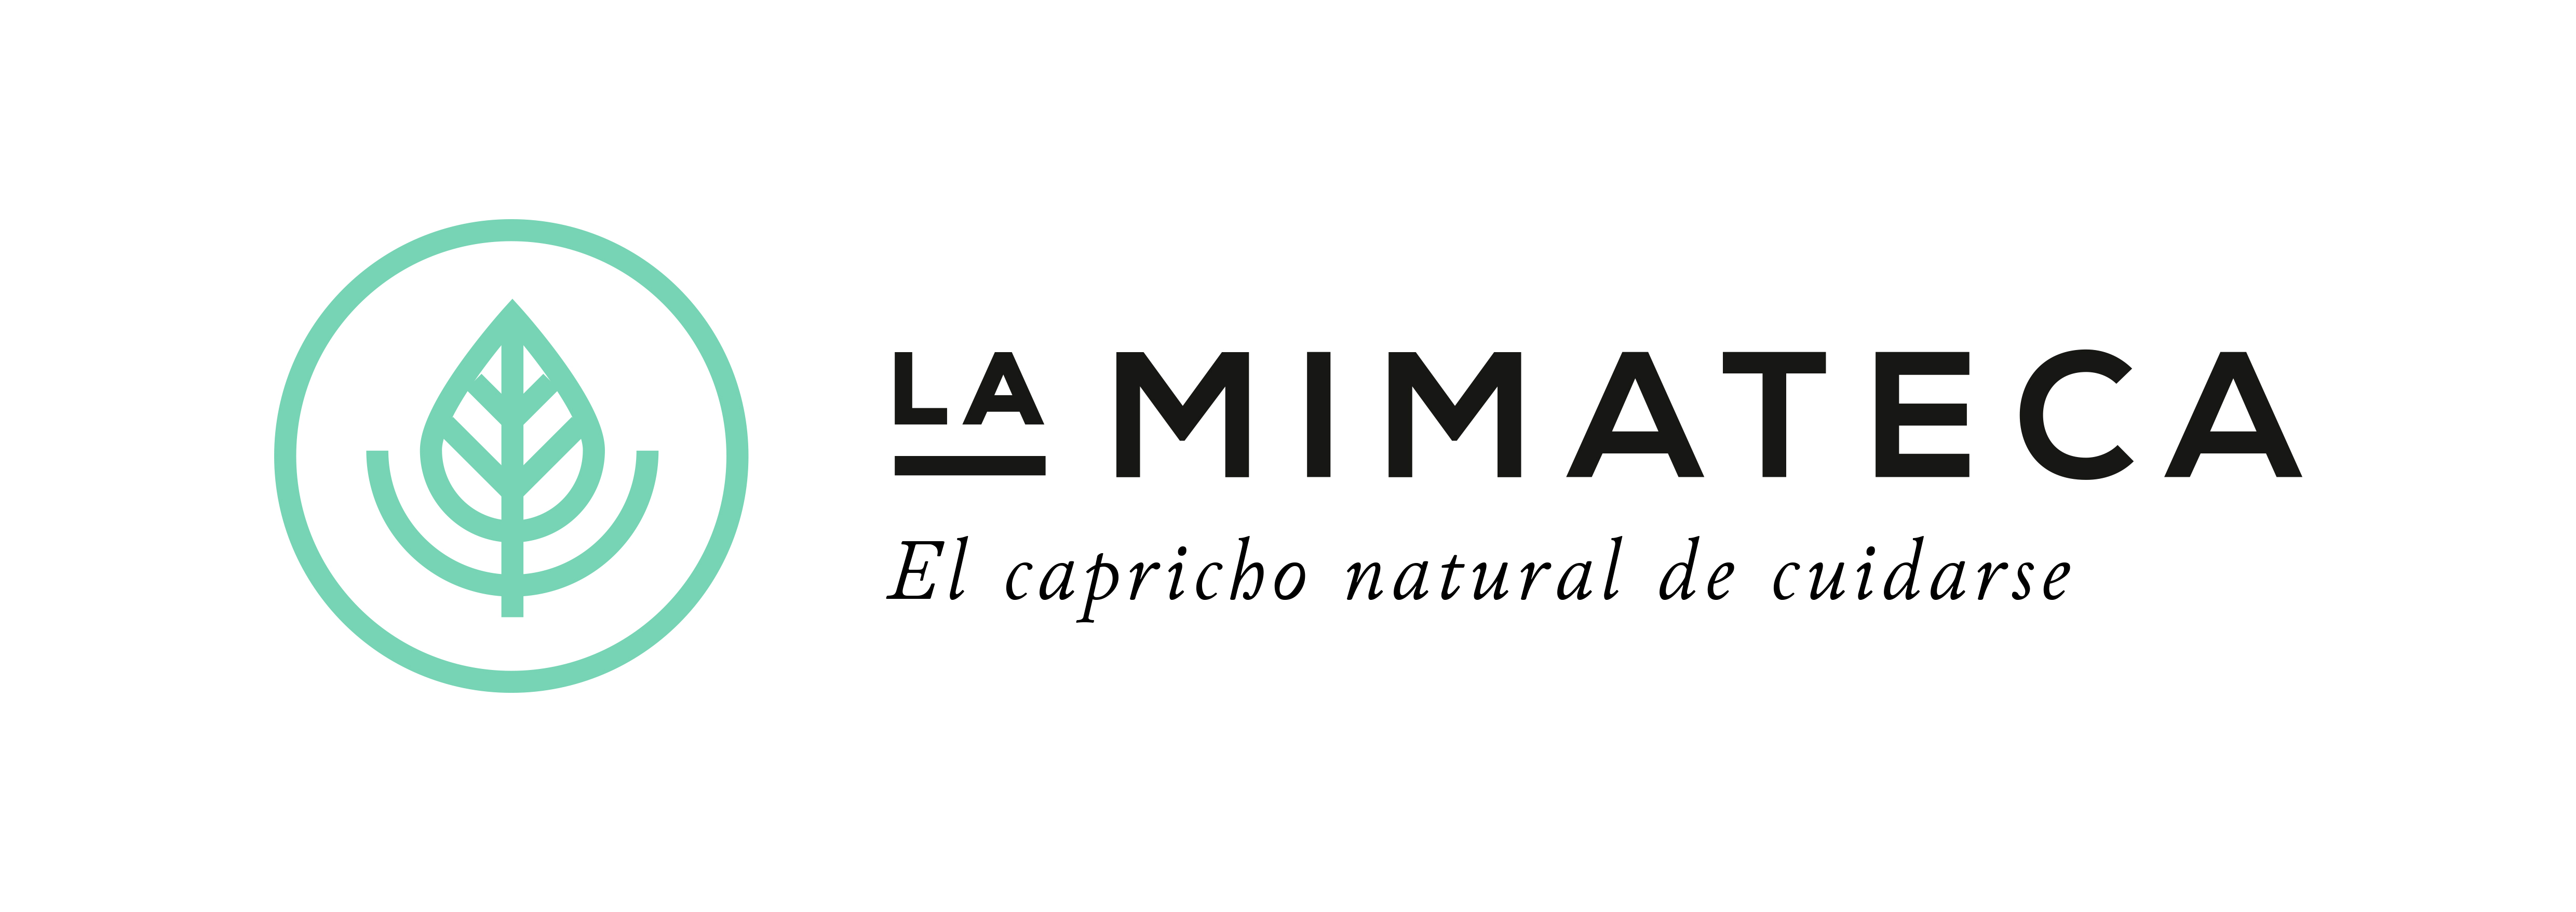 LAMIMATECA_logo_hrz_alta